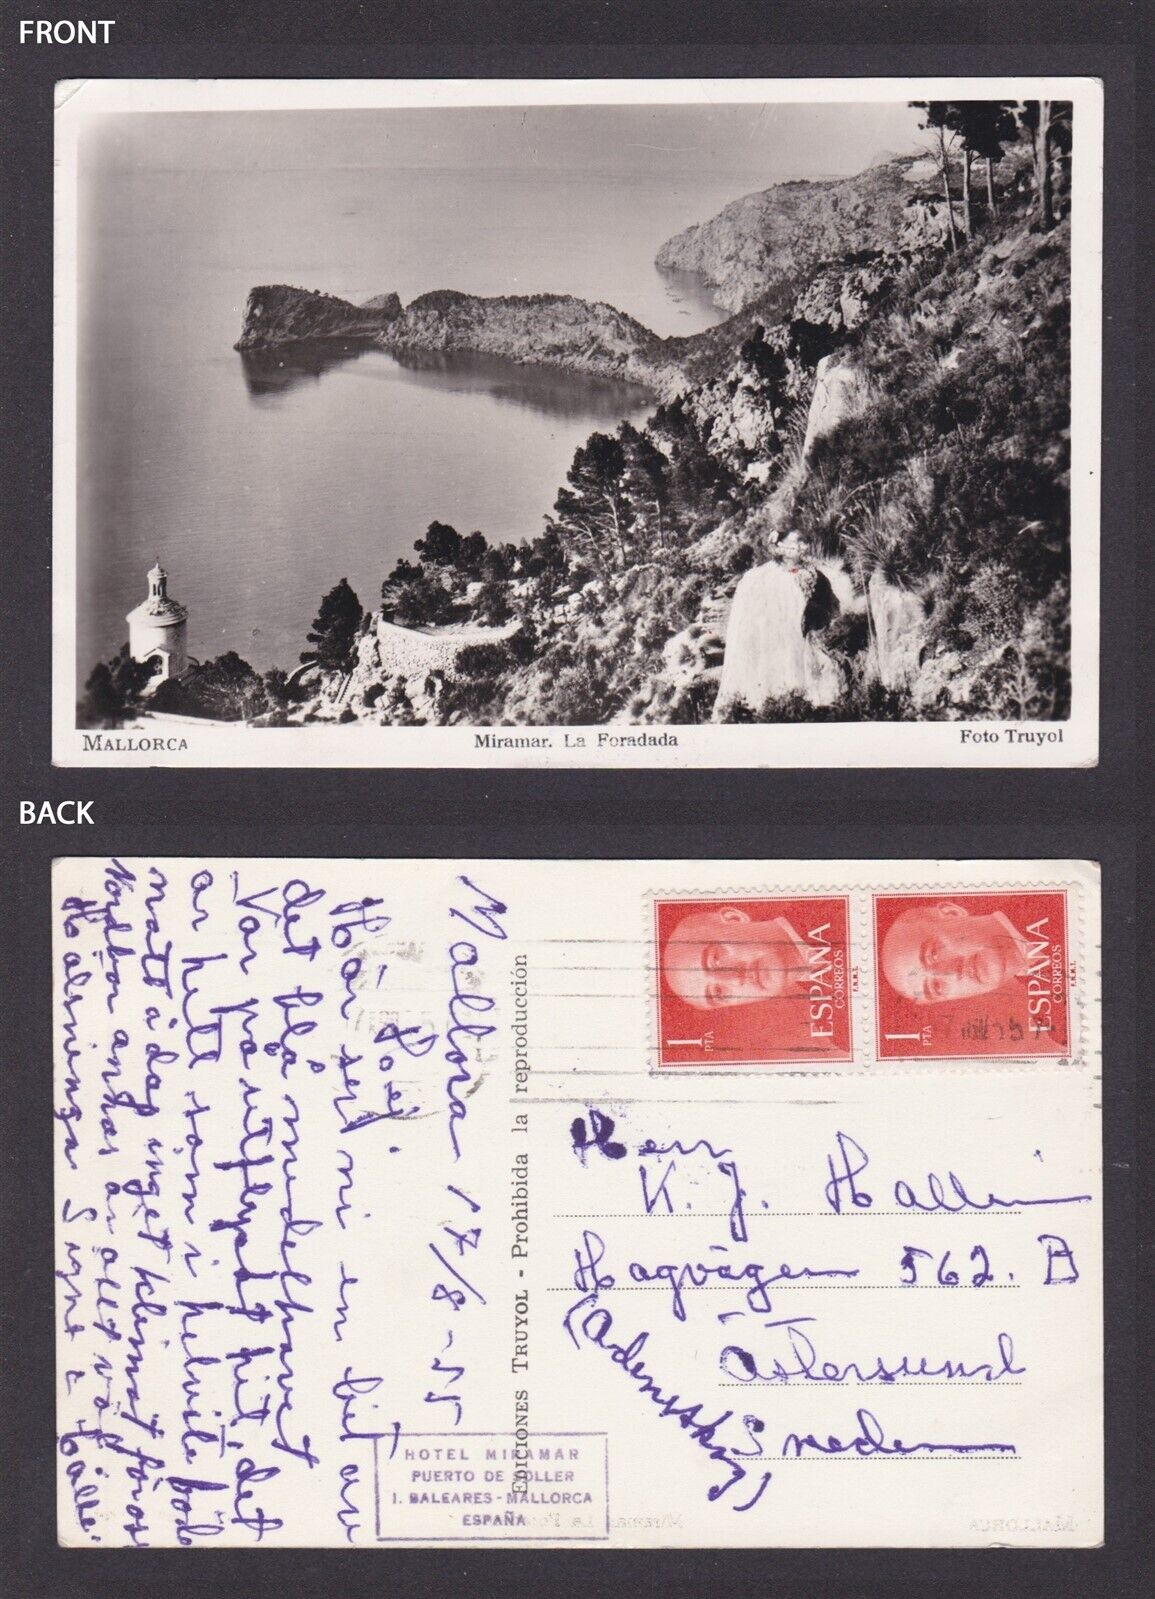 SPAIN, Vintge postcard, Palma de Mallorca, Miramar, La Foradada